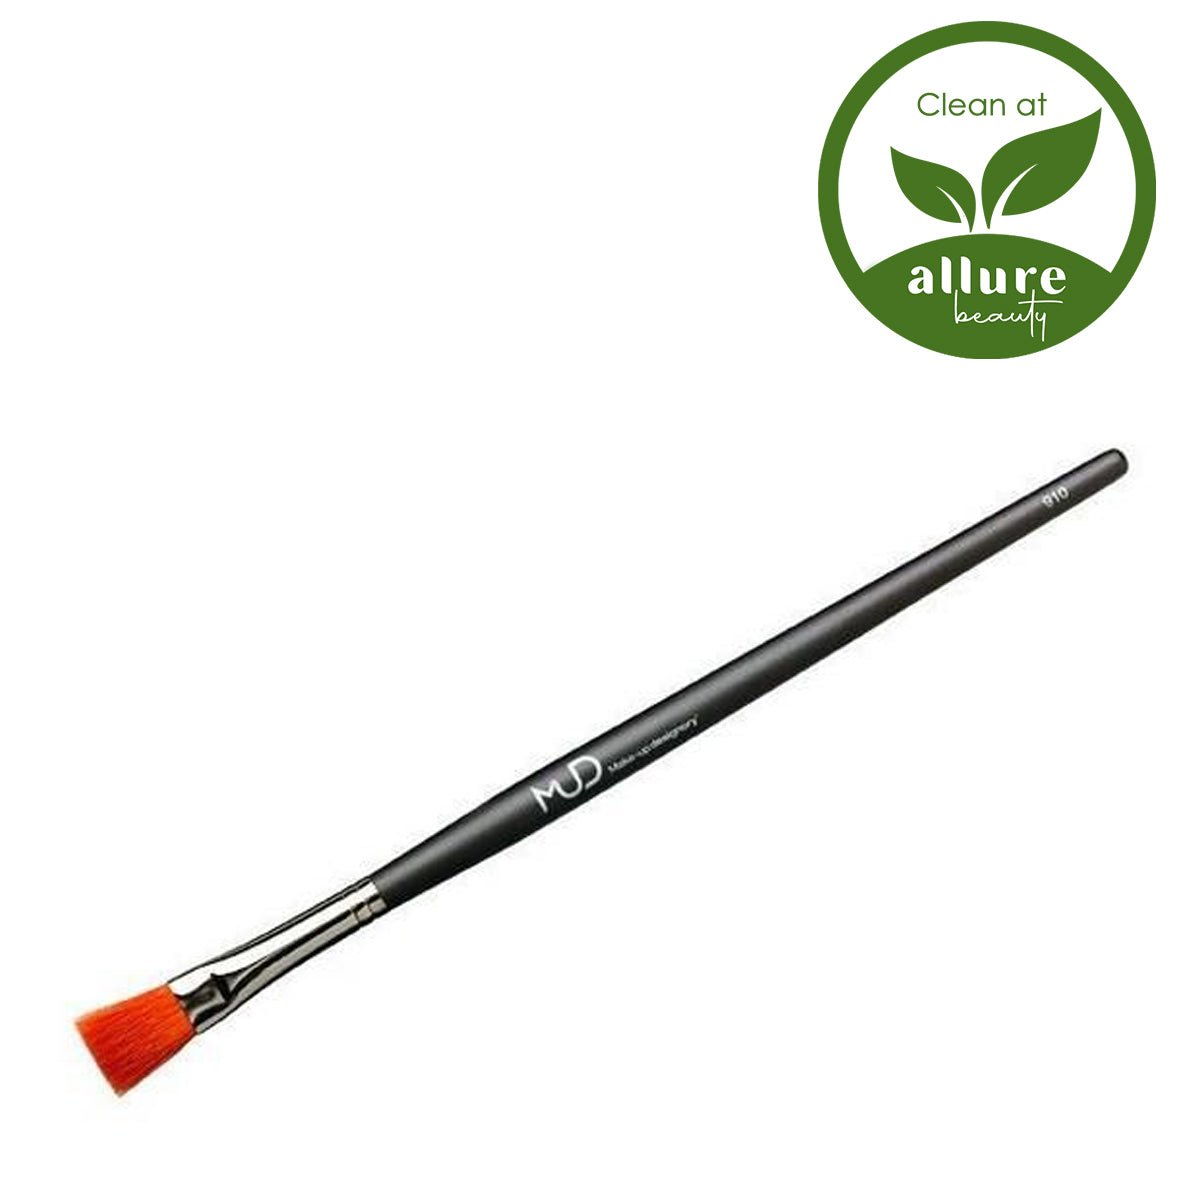 Mud Brush # 910 Orange Stipple - AllurebeautypkMud Brush # 910 Orange Stipple